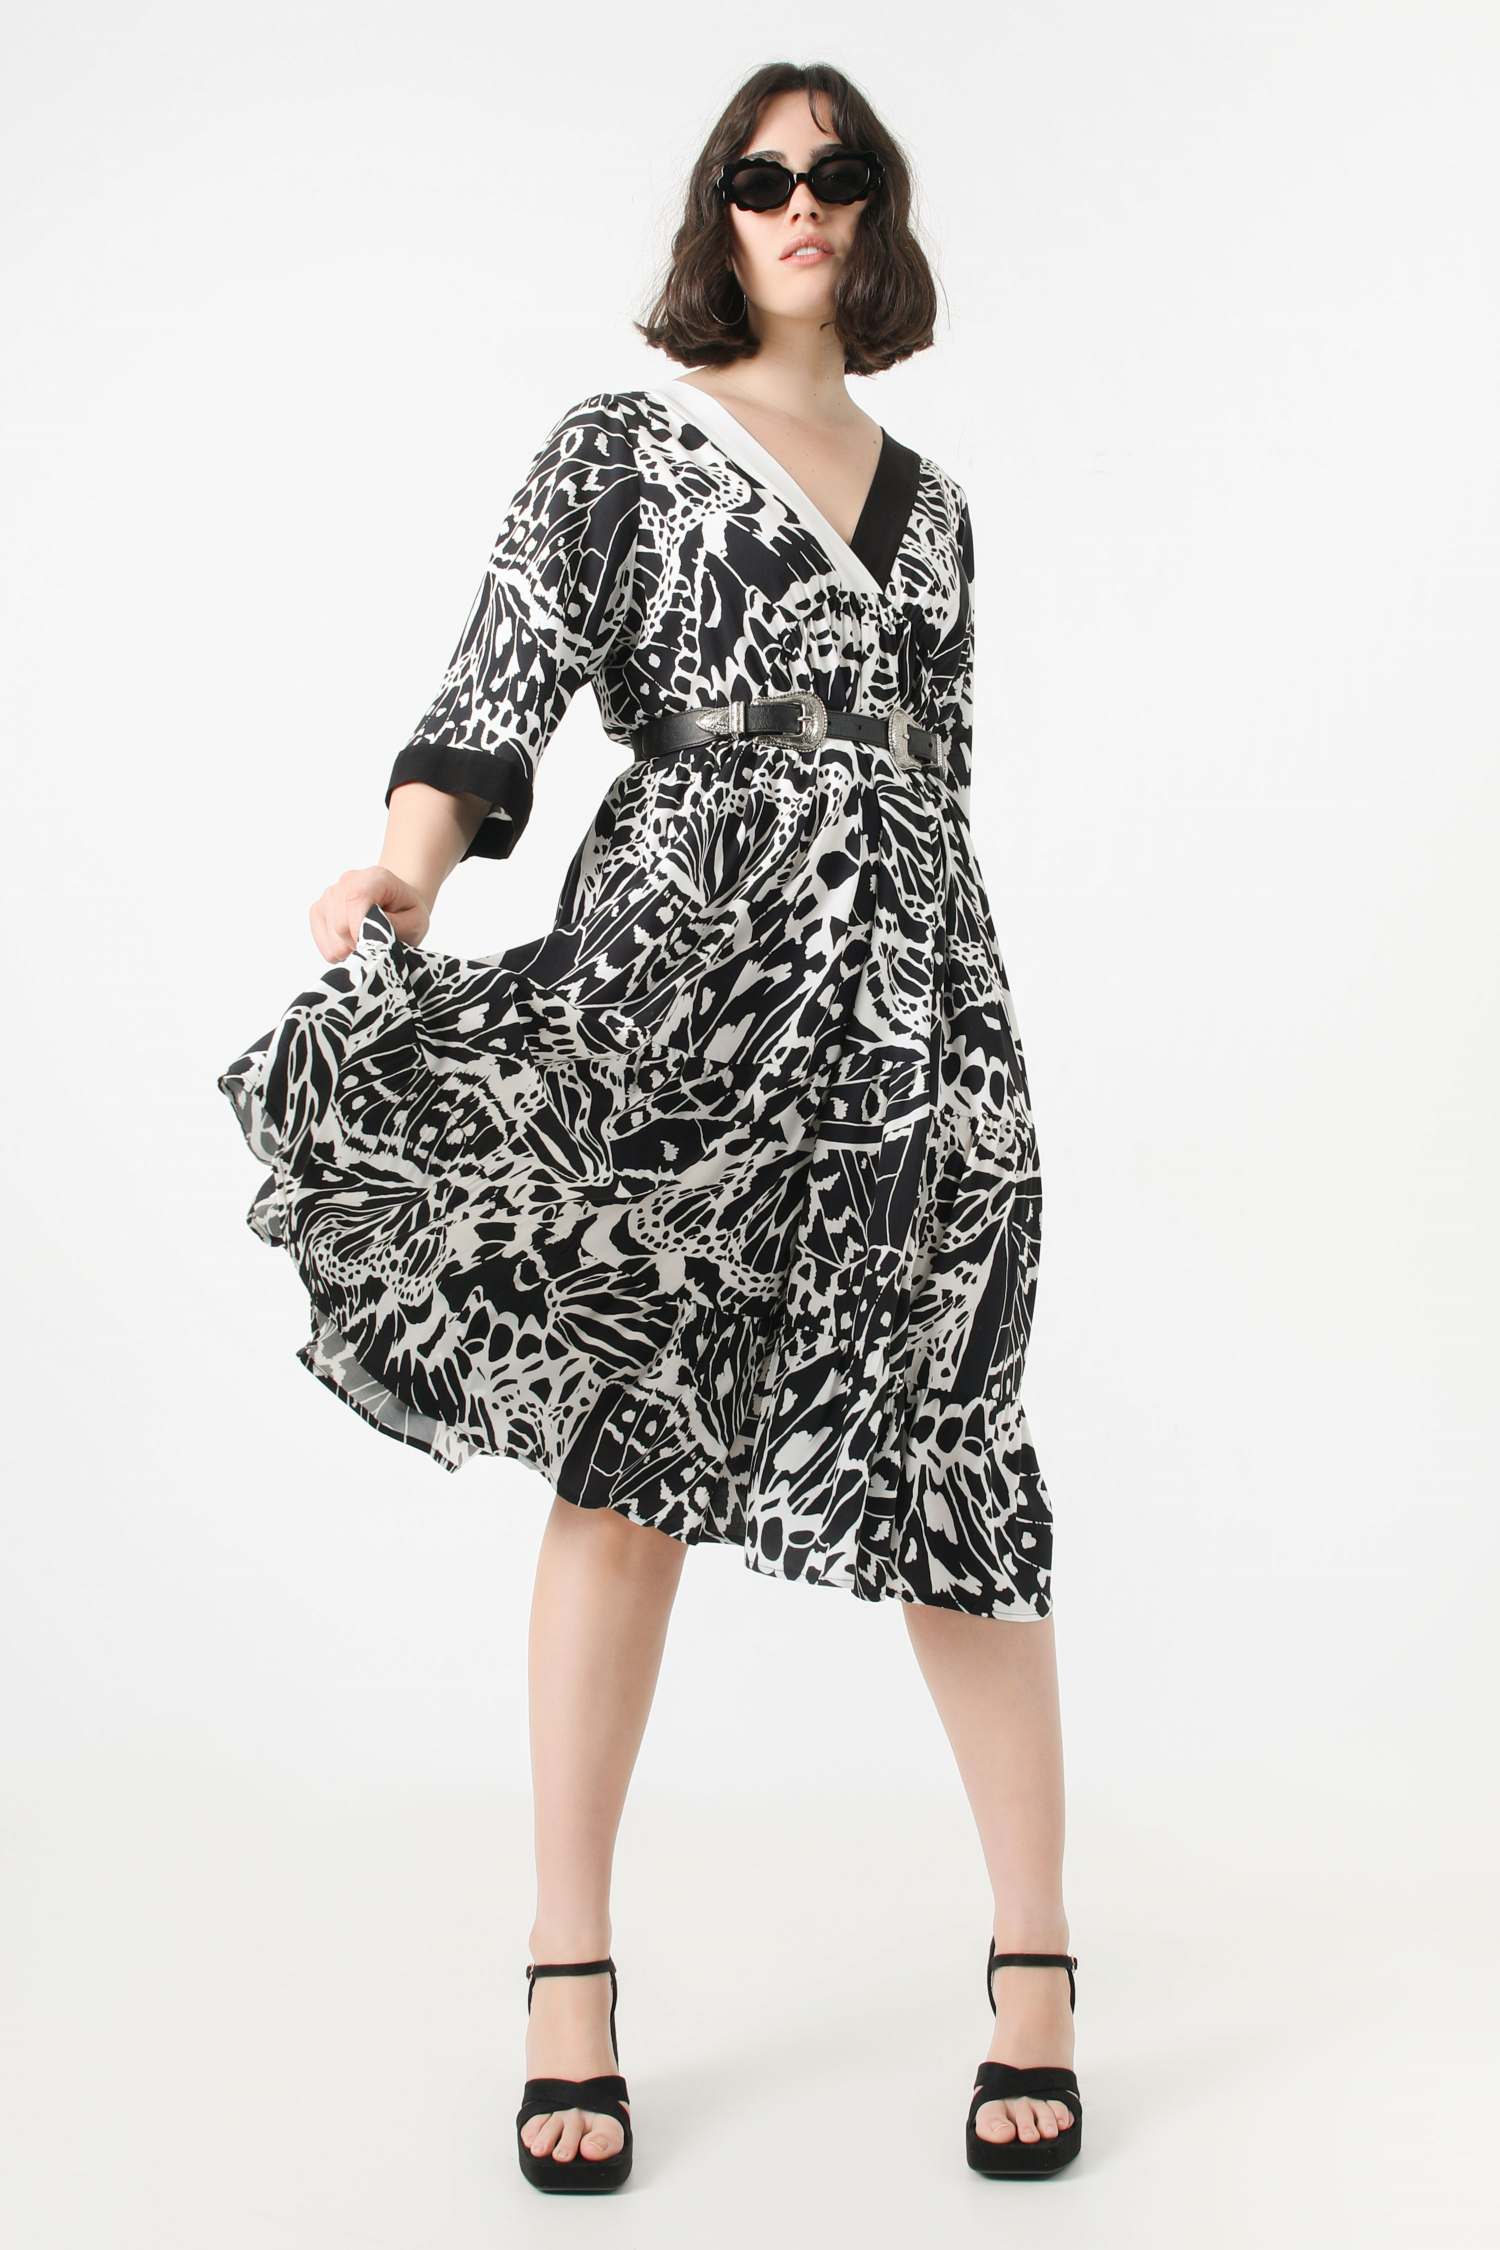 Positive/negative print dress (shipping February 15/20)